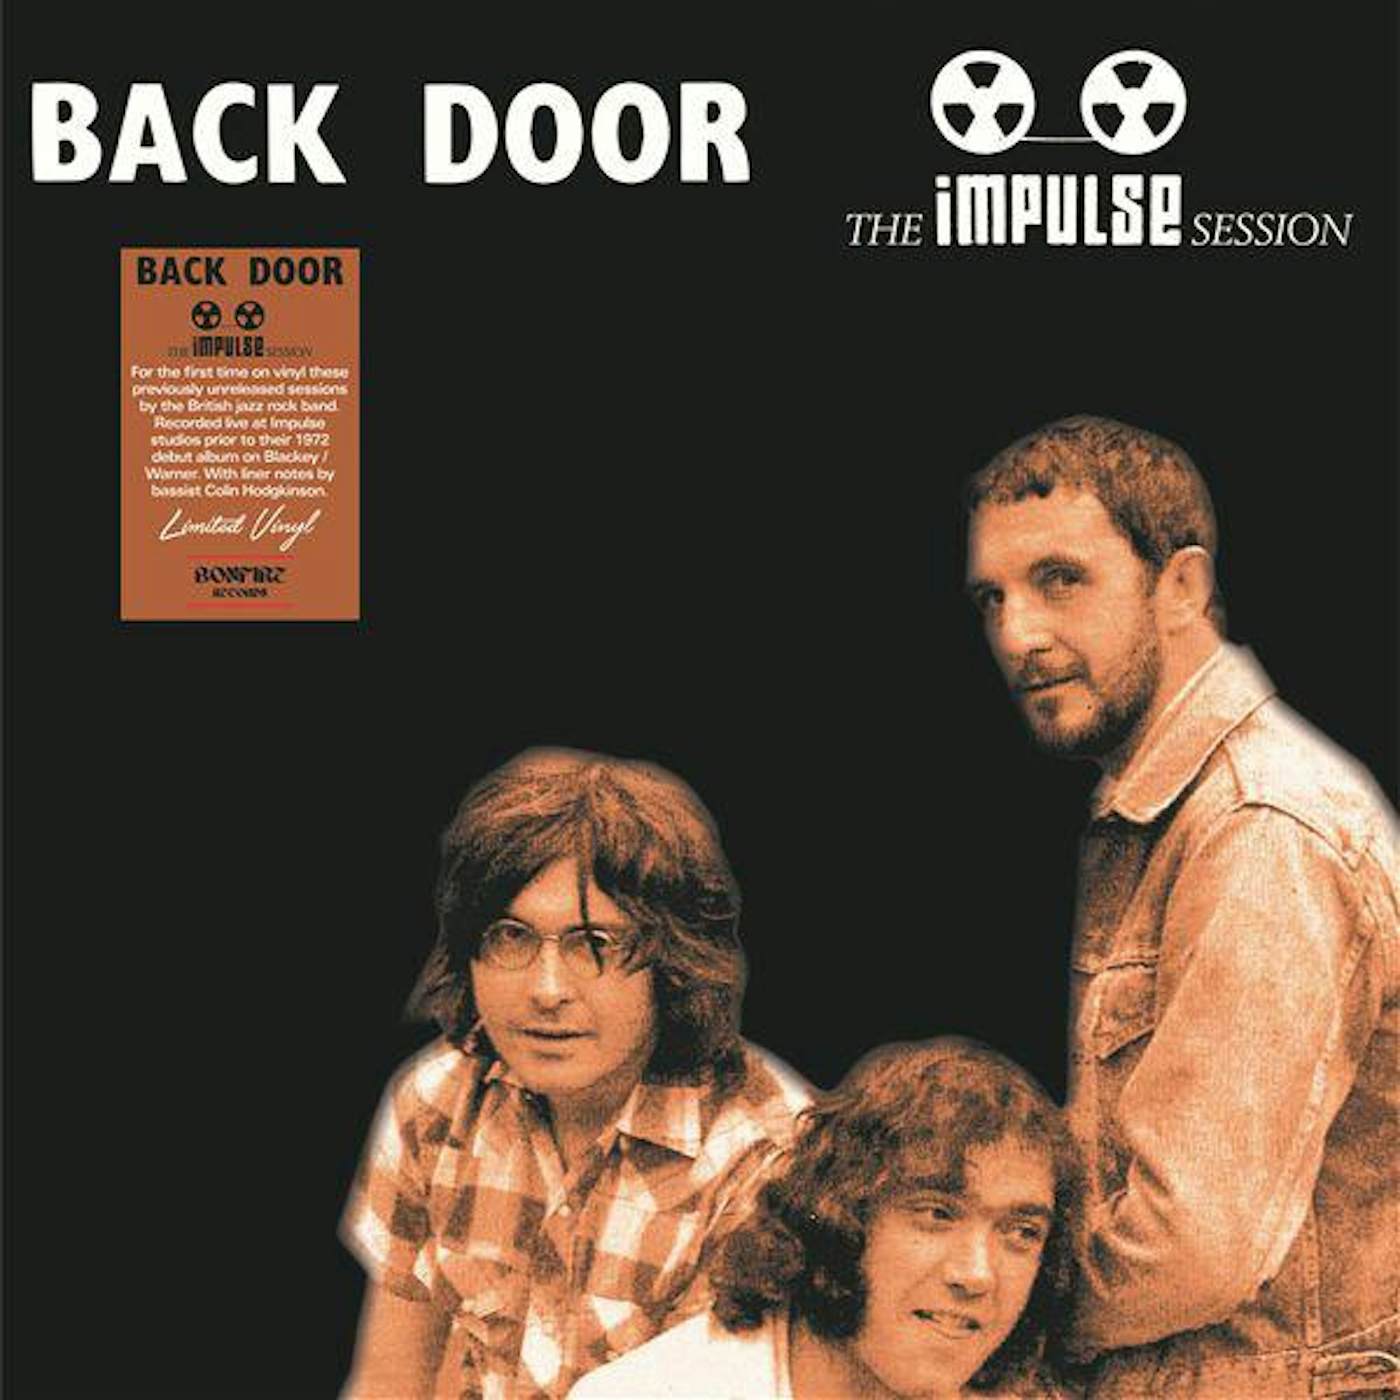 Back Door Impulse Session Vinyl Record